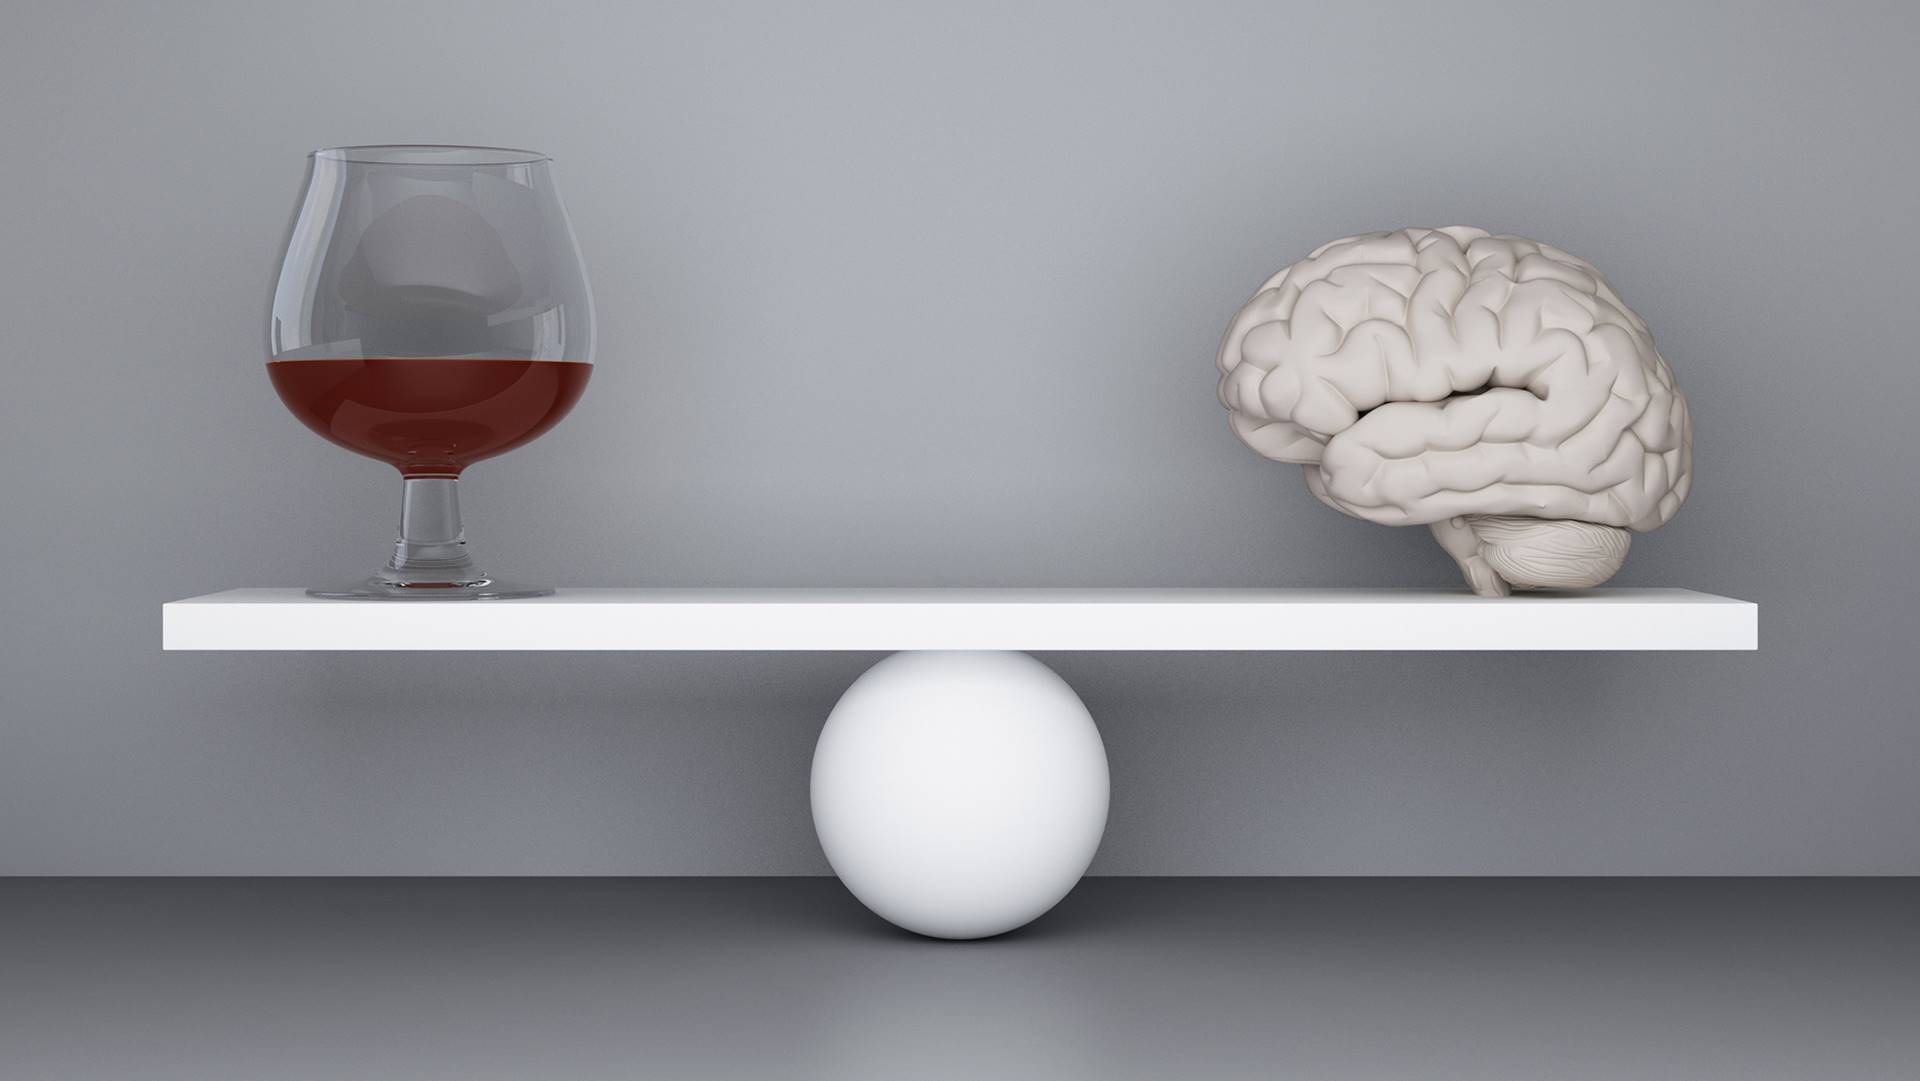 Jedno alkoholno piće dnevno povezano je sa smanjenjem veličine mozga